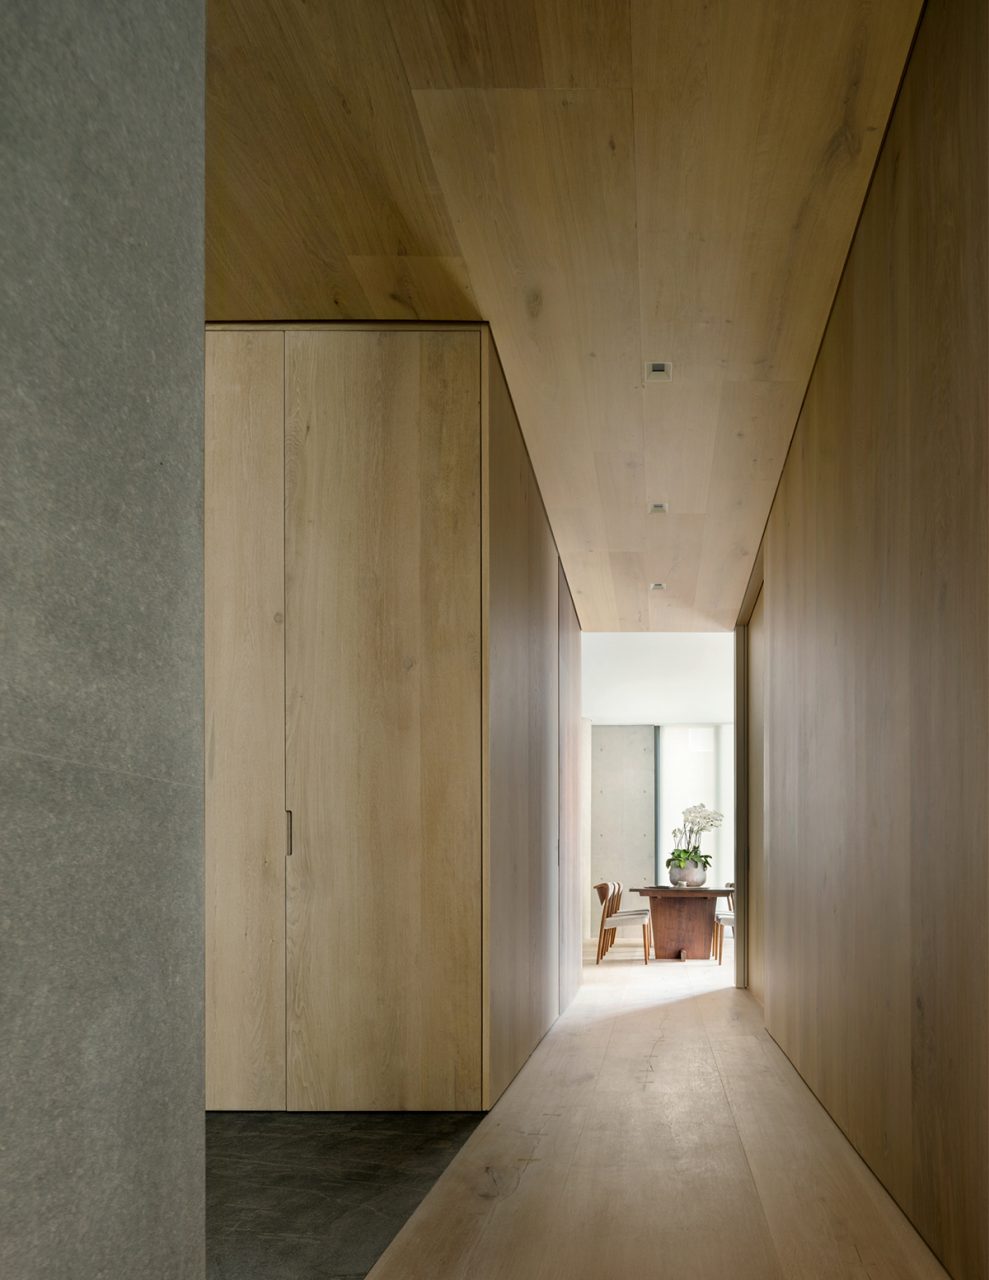 Photo of wood-clad interior hallway in apartment